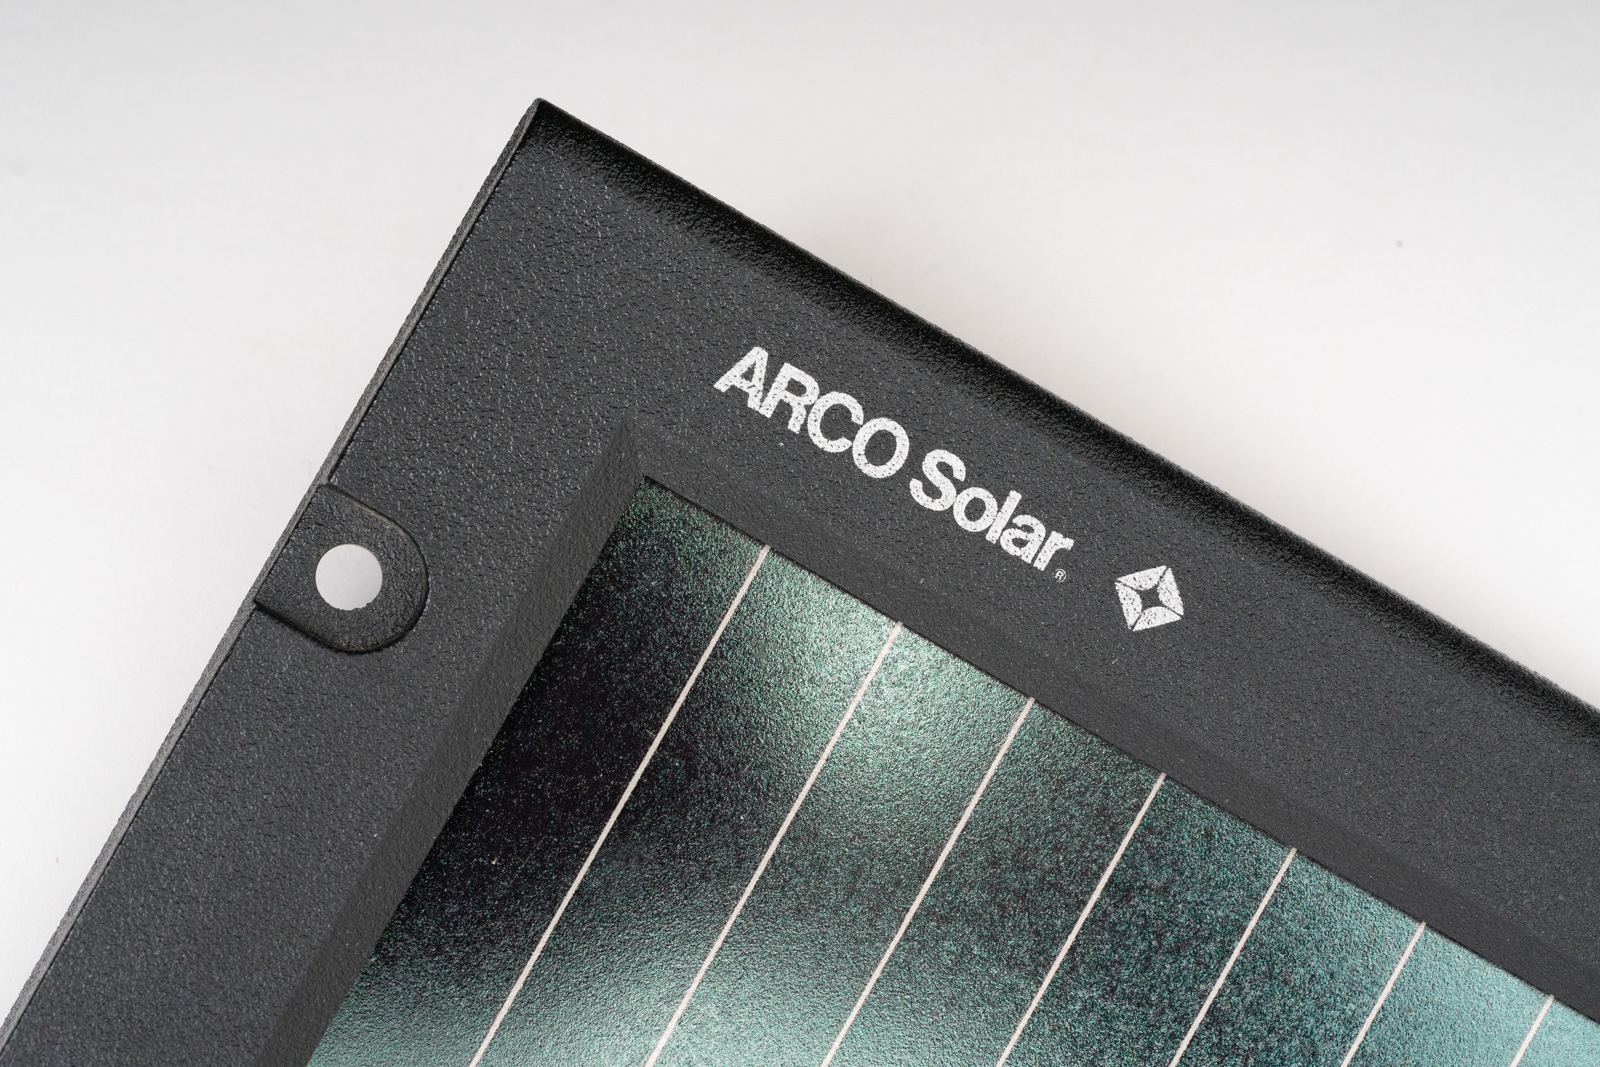 Arco Solar Genesis G100 thin film solar panel